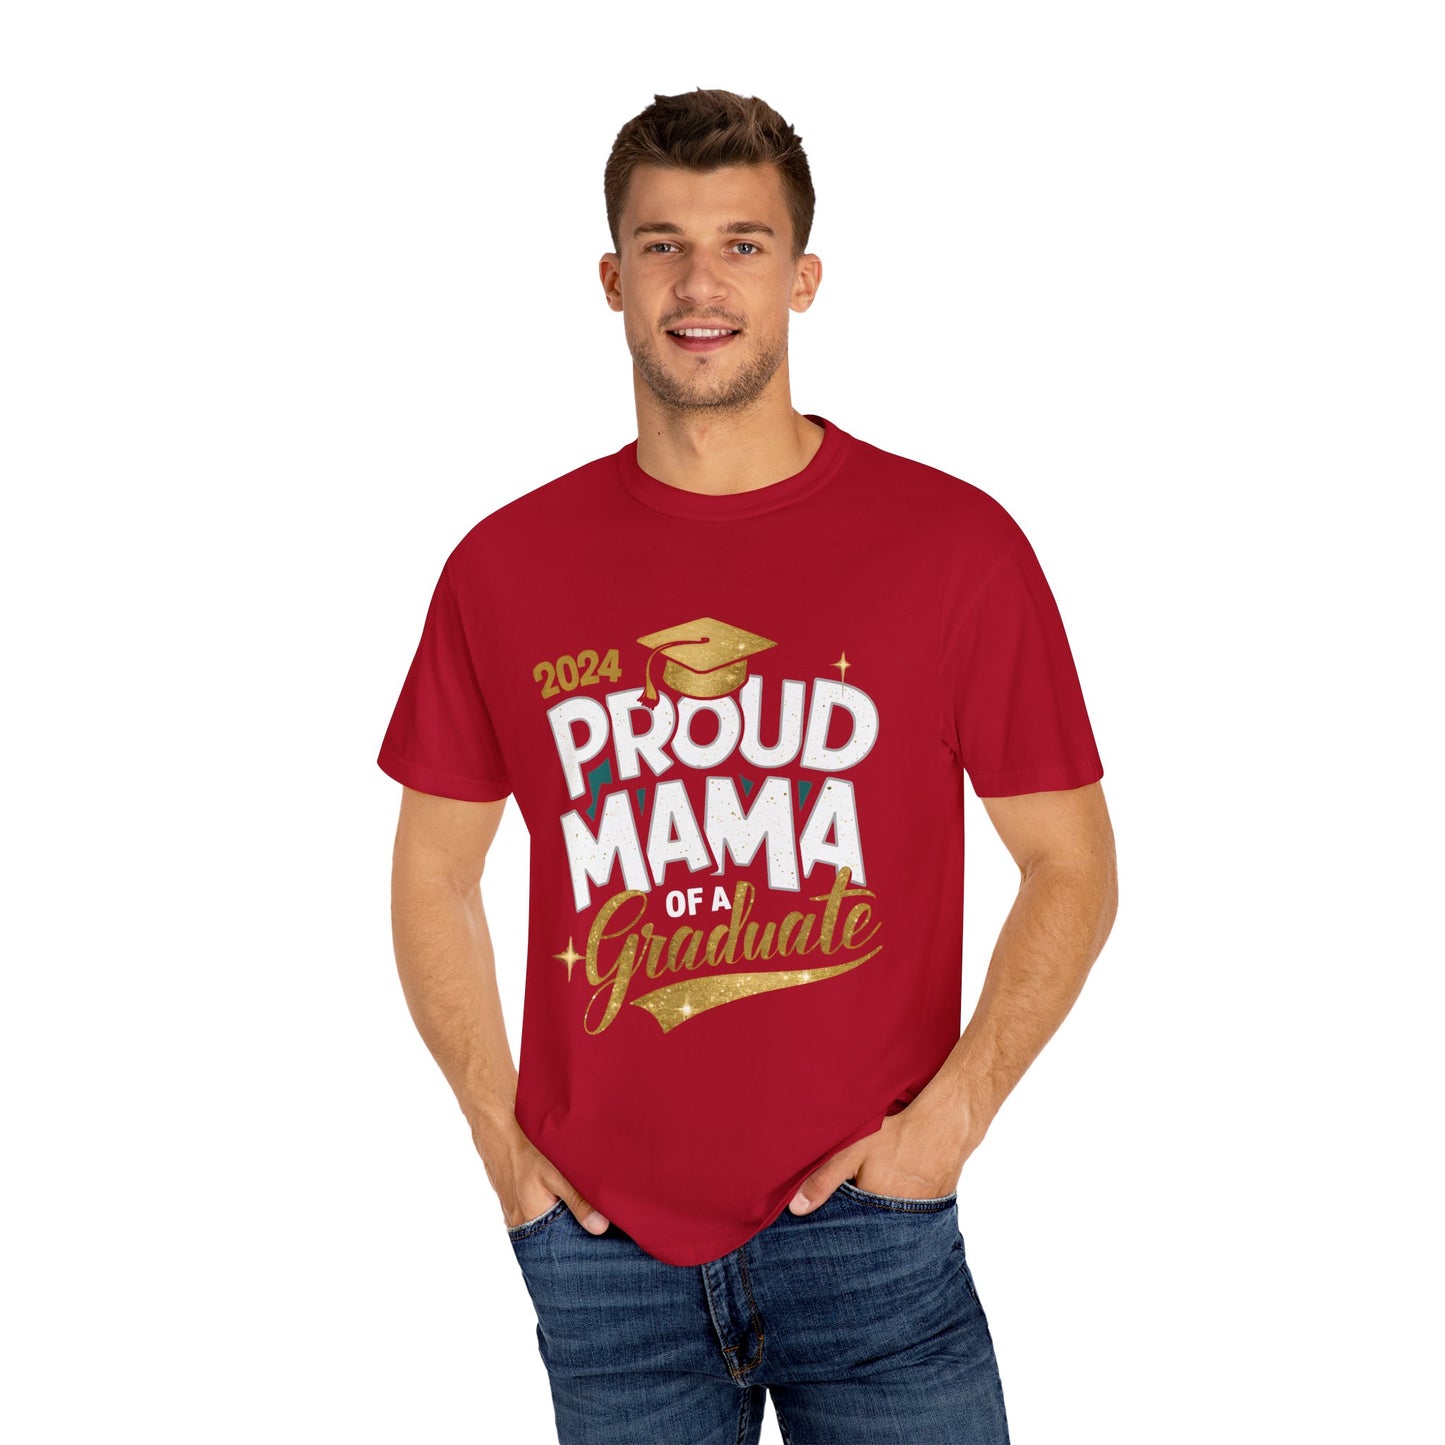 Proud Mama of a 2024 Graduate Unisex Garment-dyed T-shirt Cotton Funny Humorous Graphic Soft Premium Unisex Men Women Red T-shirt Birthday Gift-21